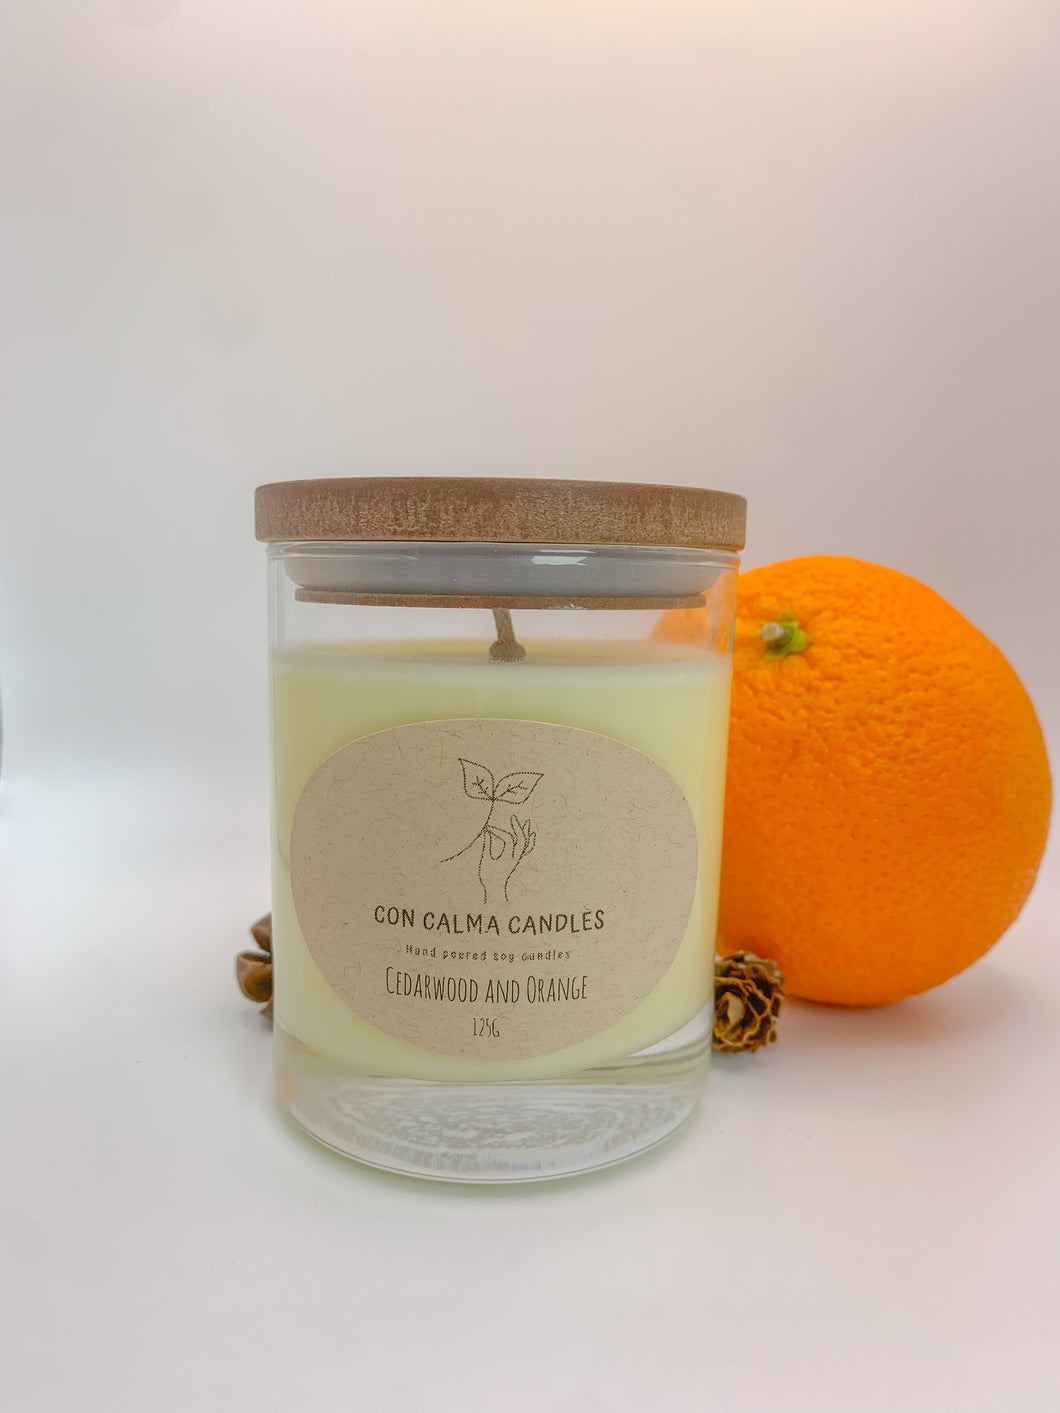 Cedarwood and Orange soy wax candle